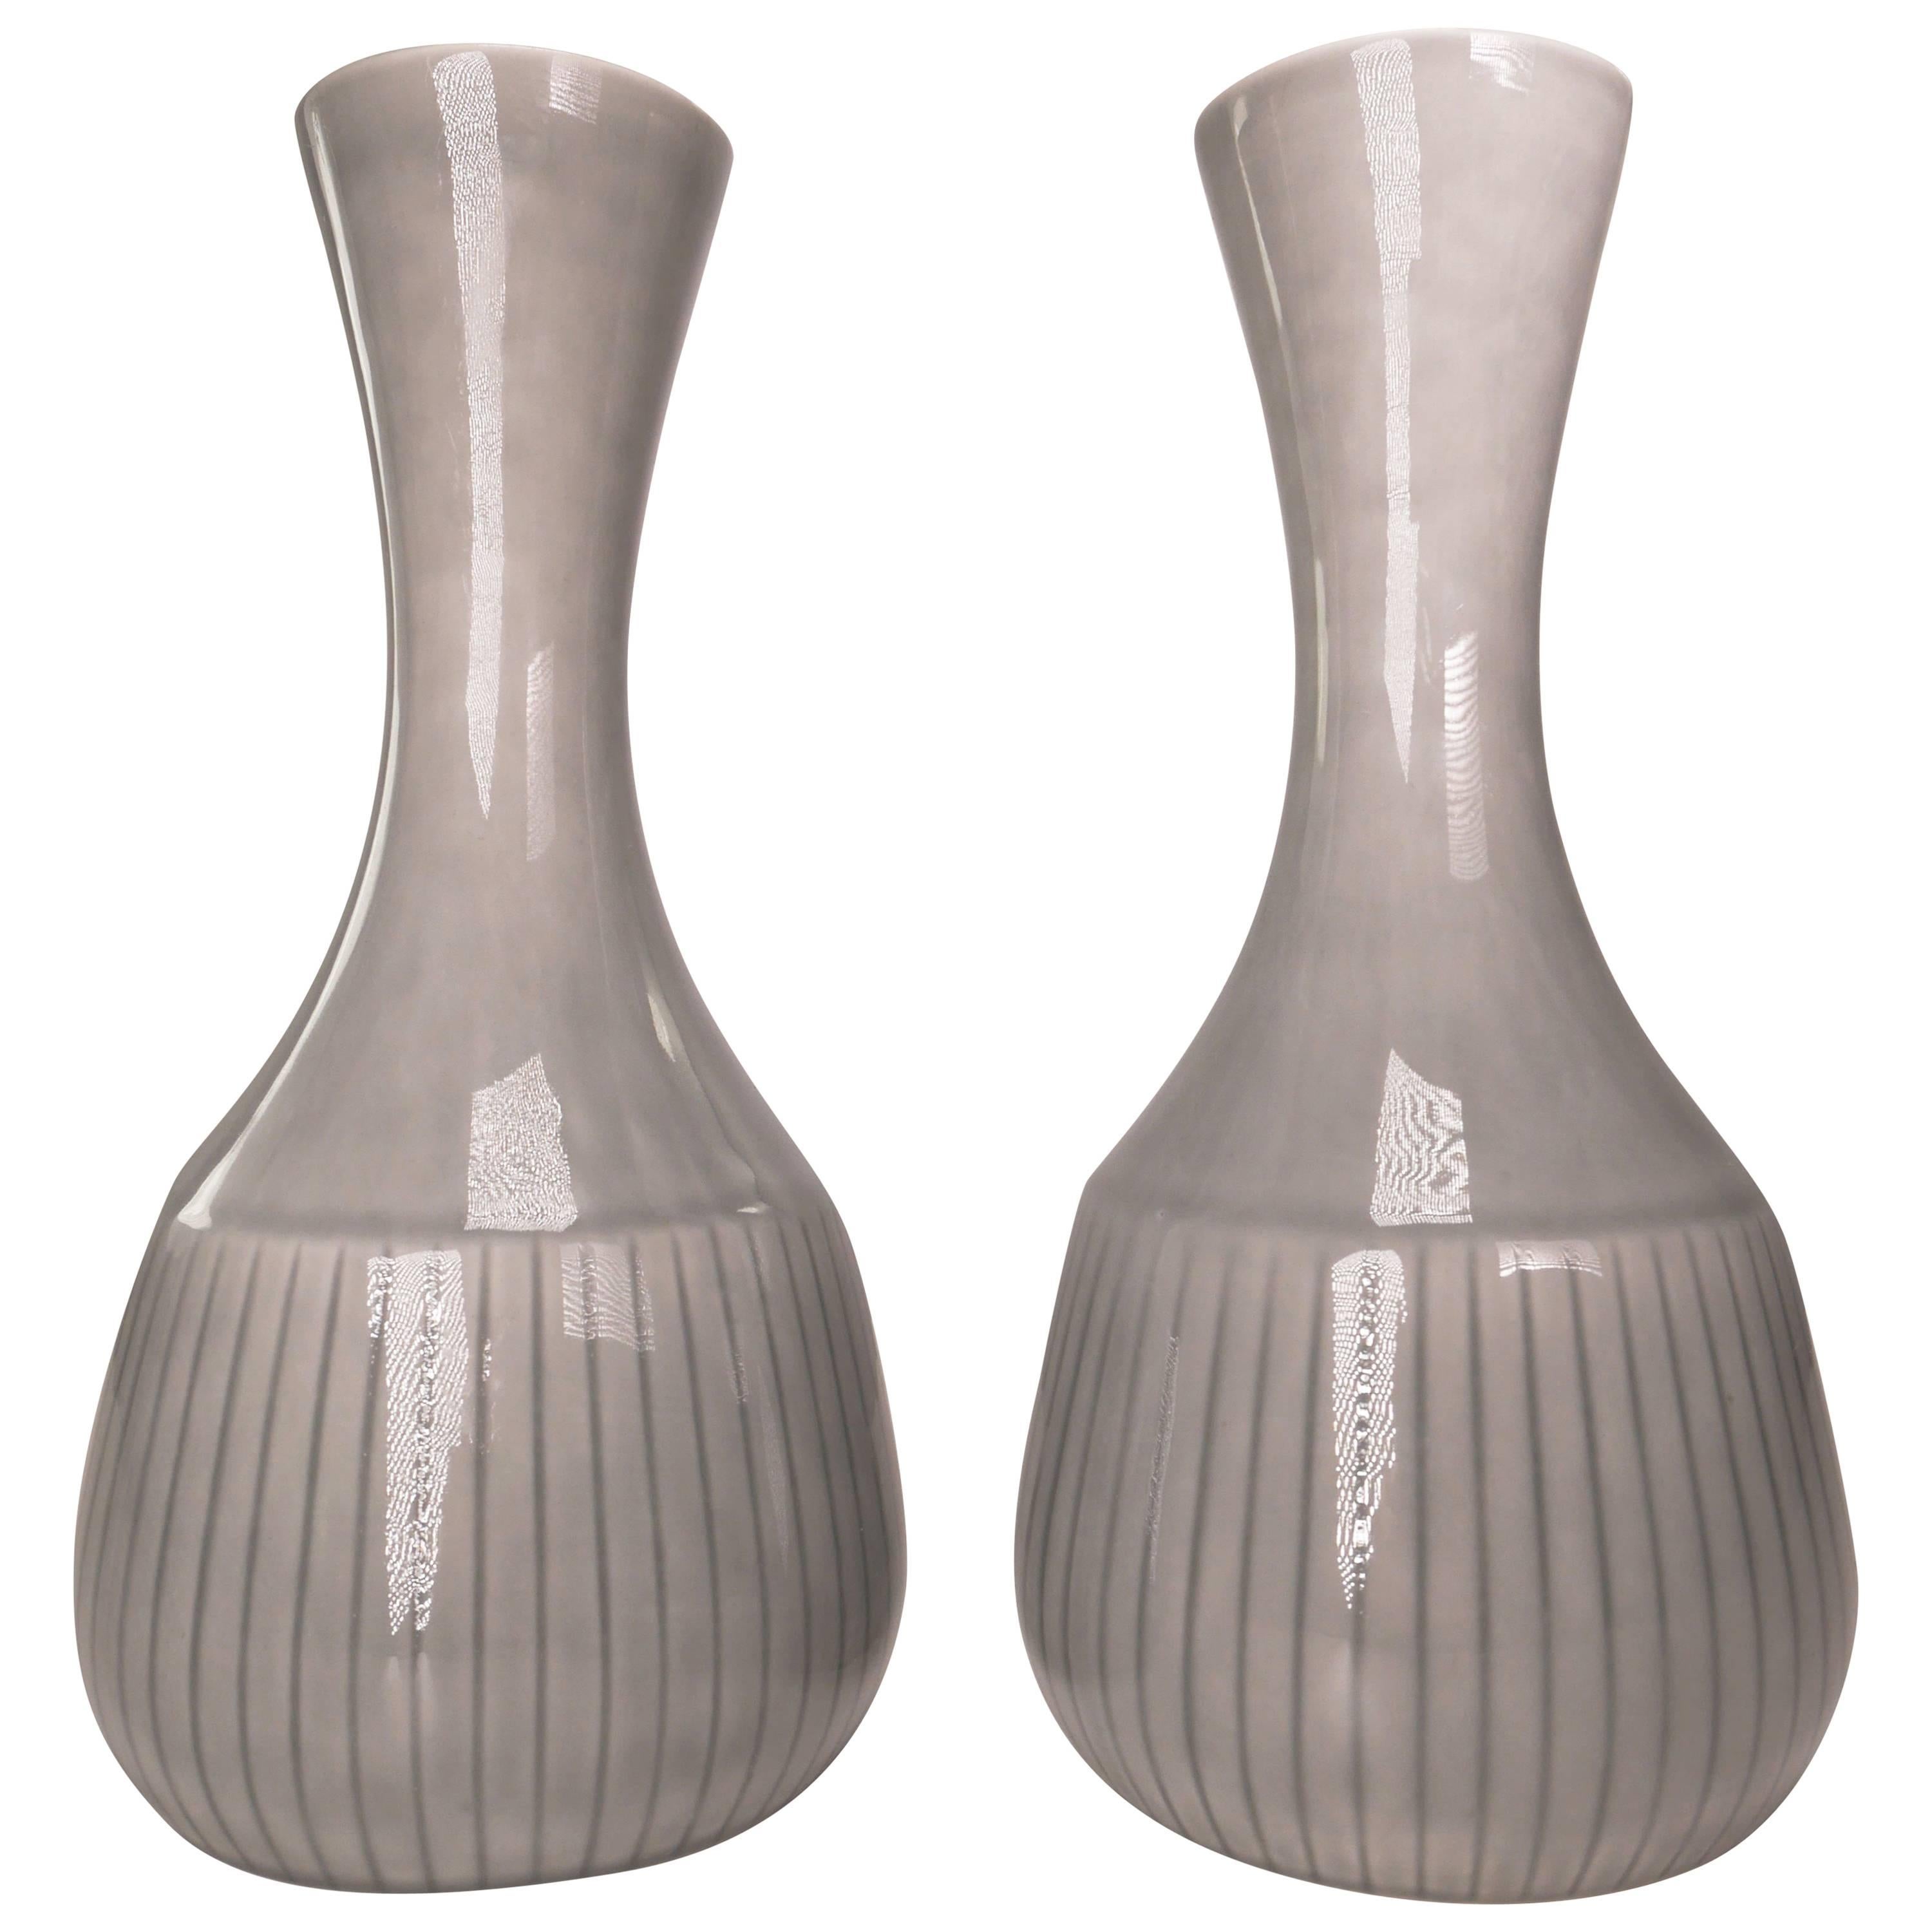 Gunnar Nylund for Rörstrand 1950s Modernist Gray Striped Vases